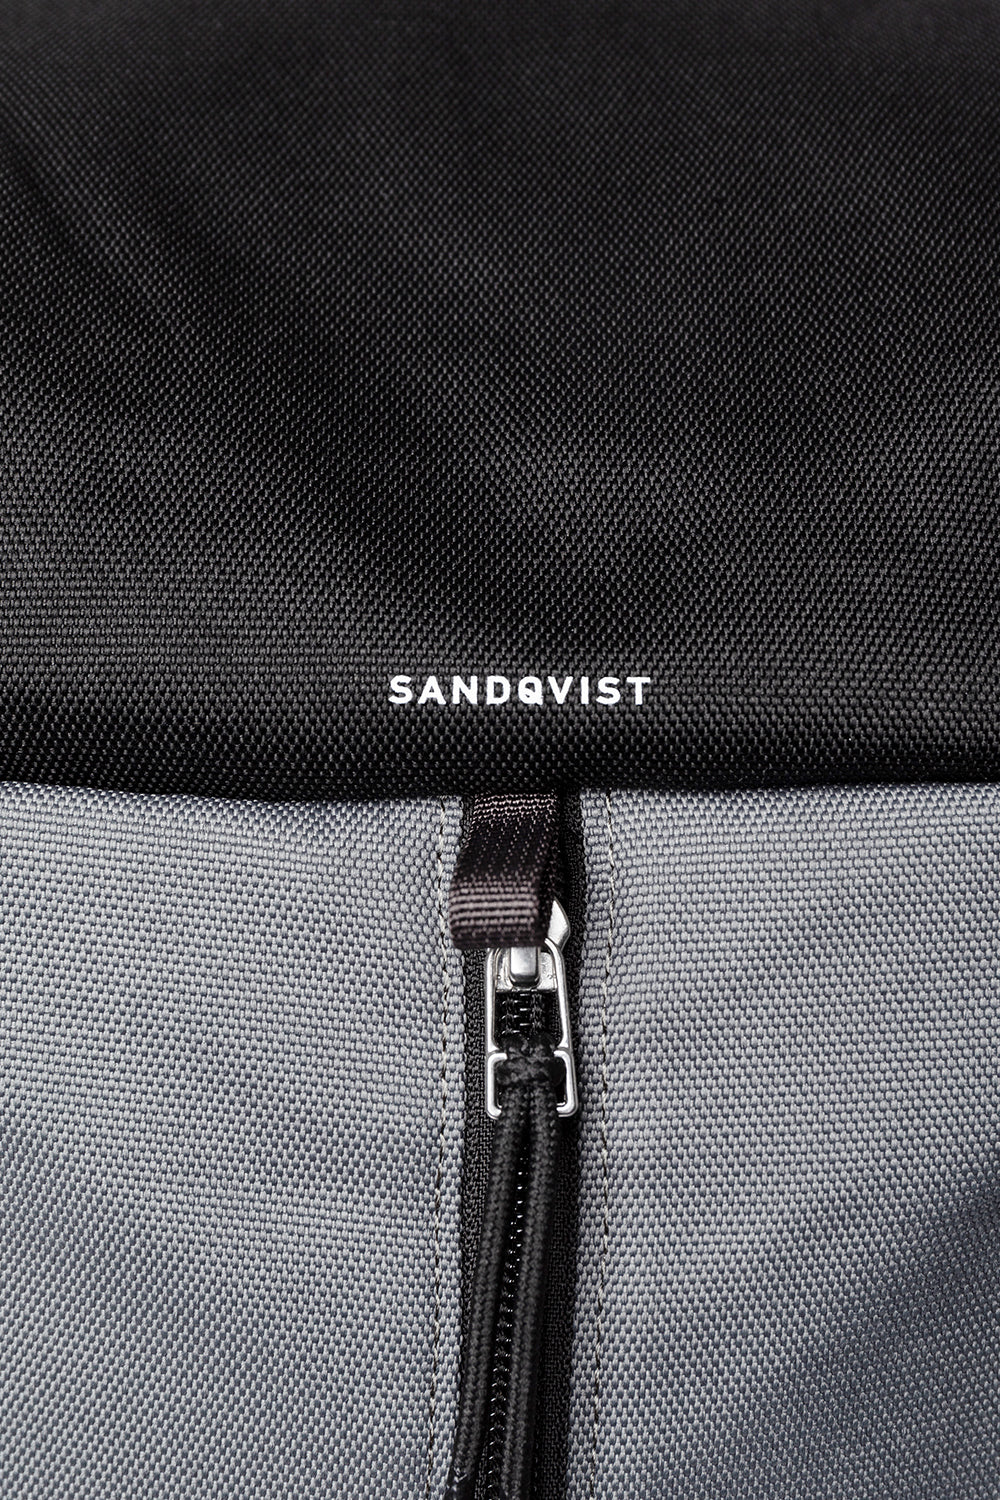 Sandqvist Sune Backpack (Multi Dark)